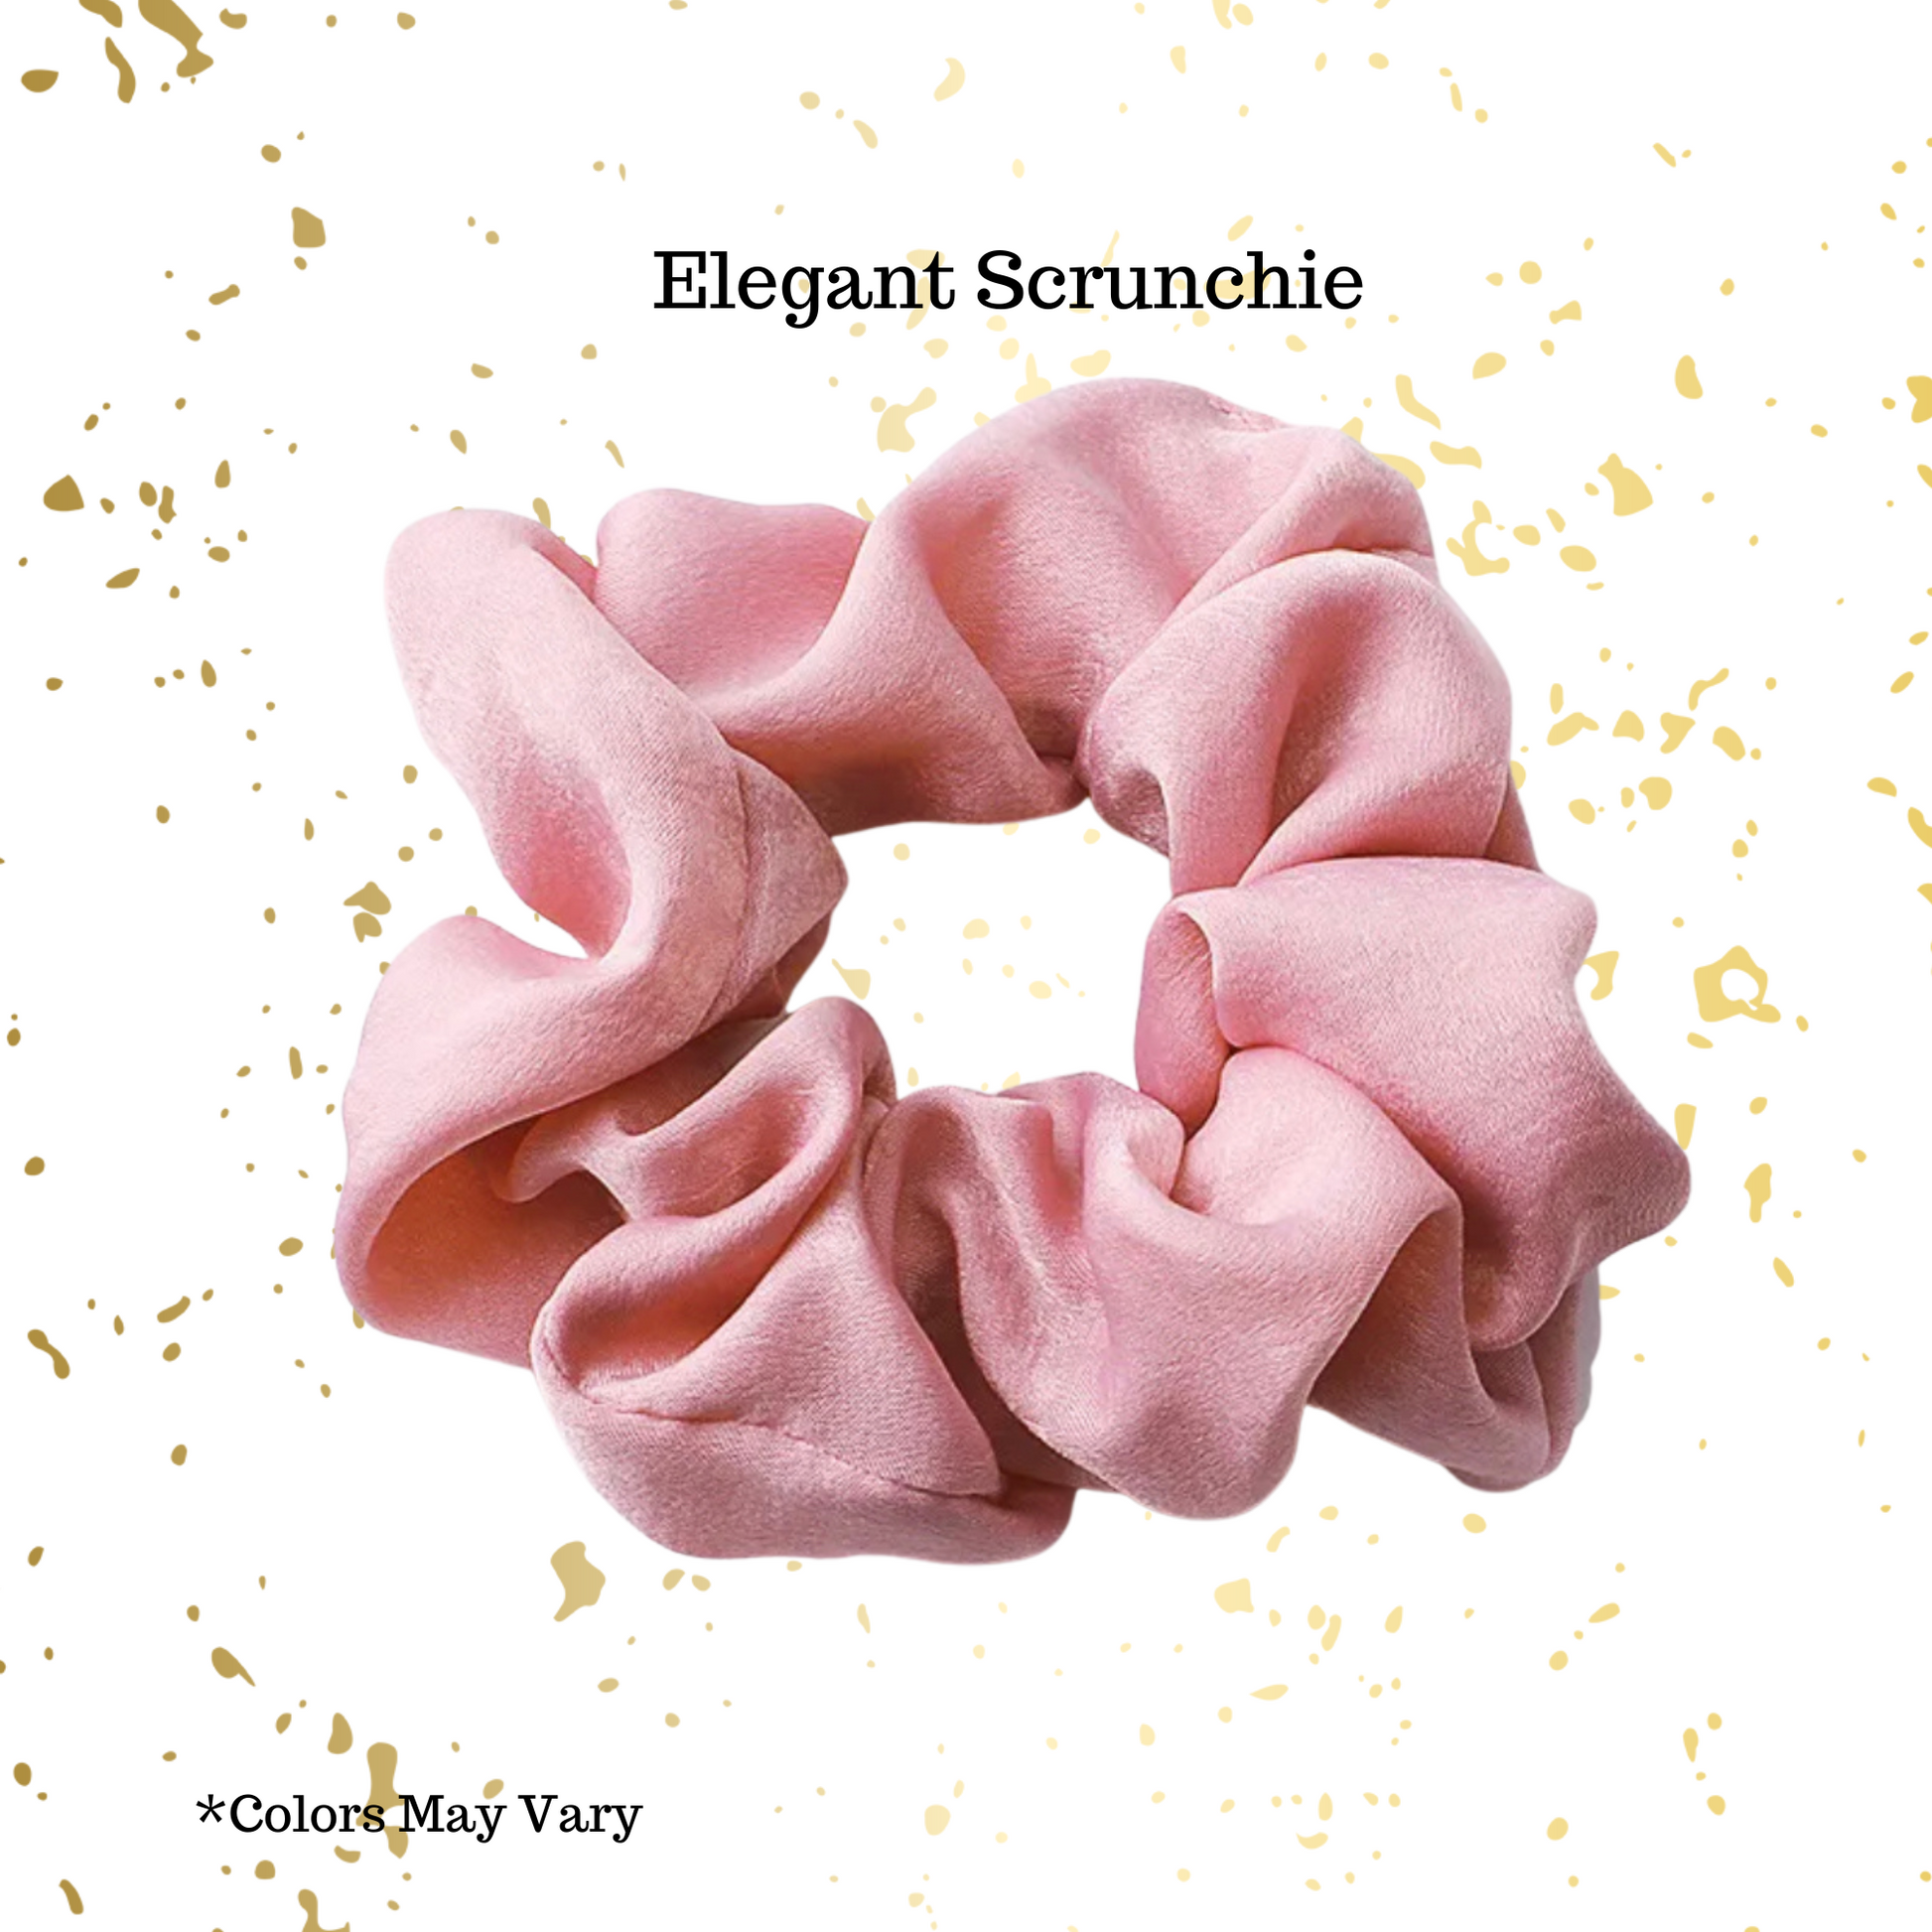 elegant scrunchie for women trendy mom gifts hey you gift box Houston Texas Gift Shop